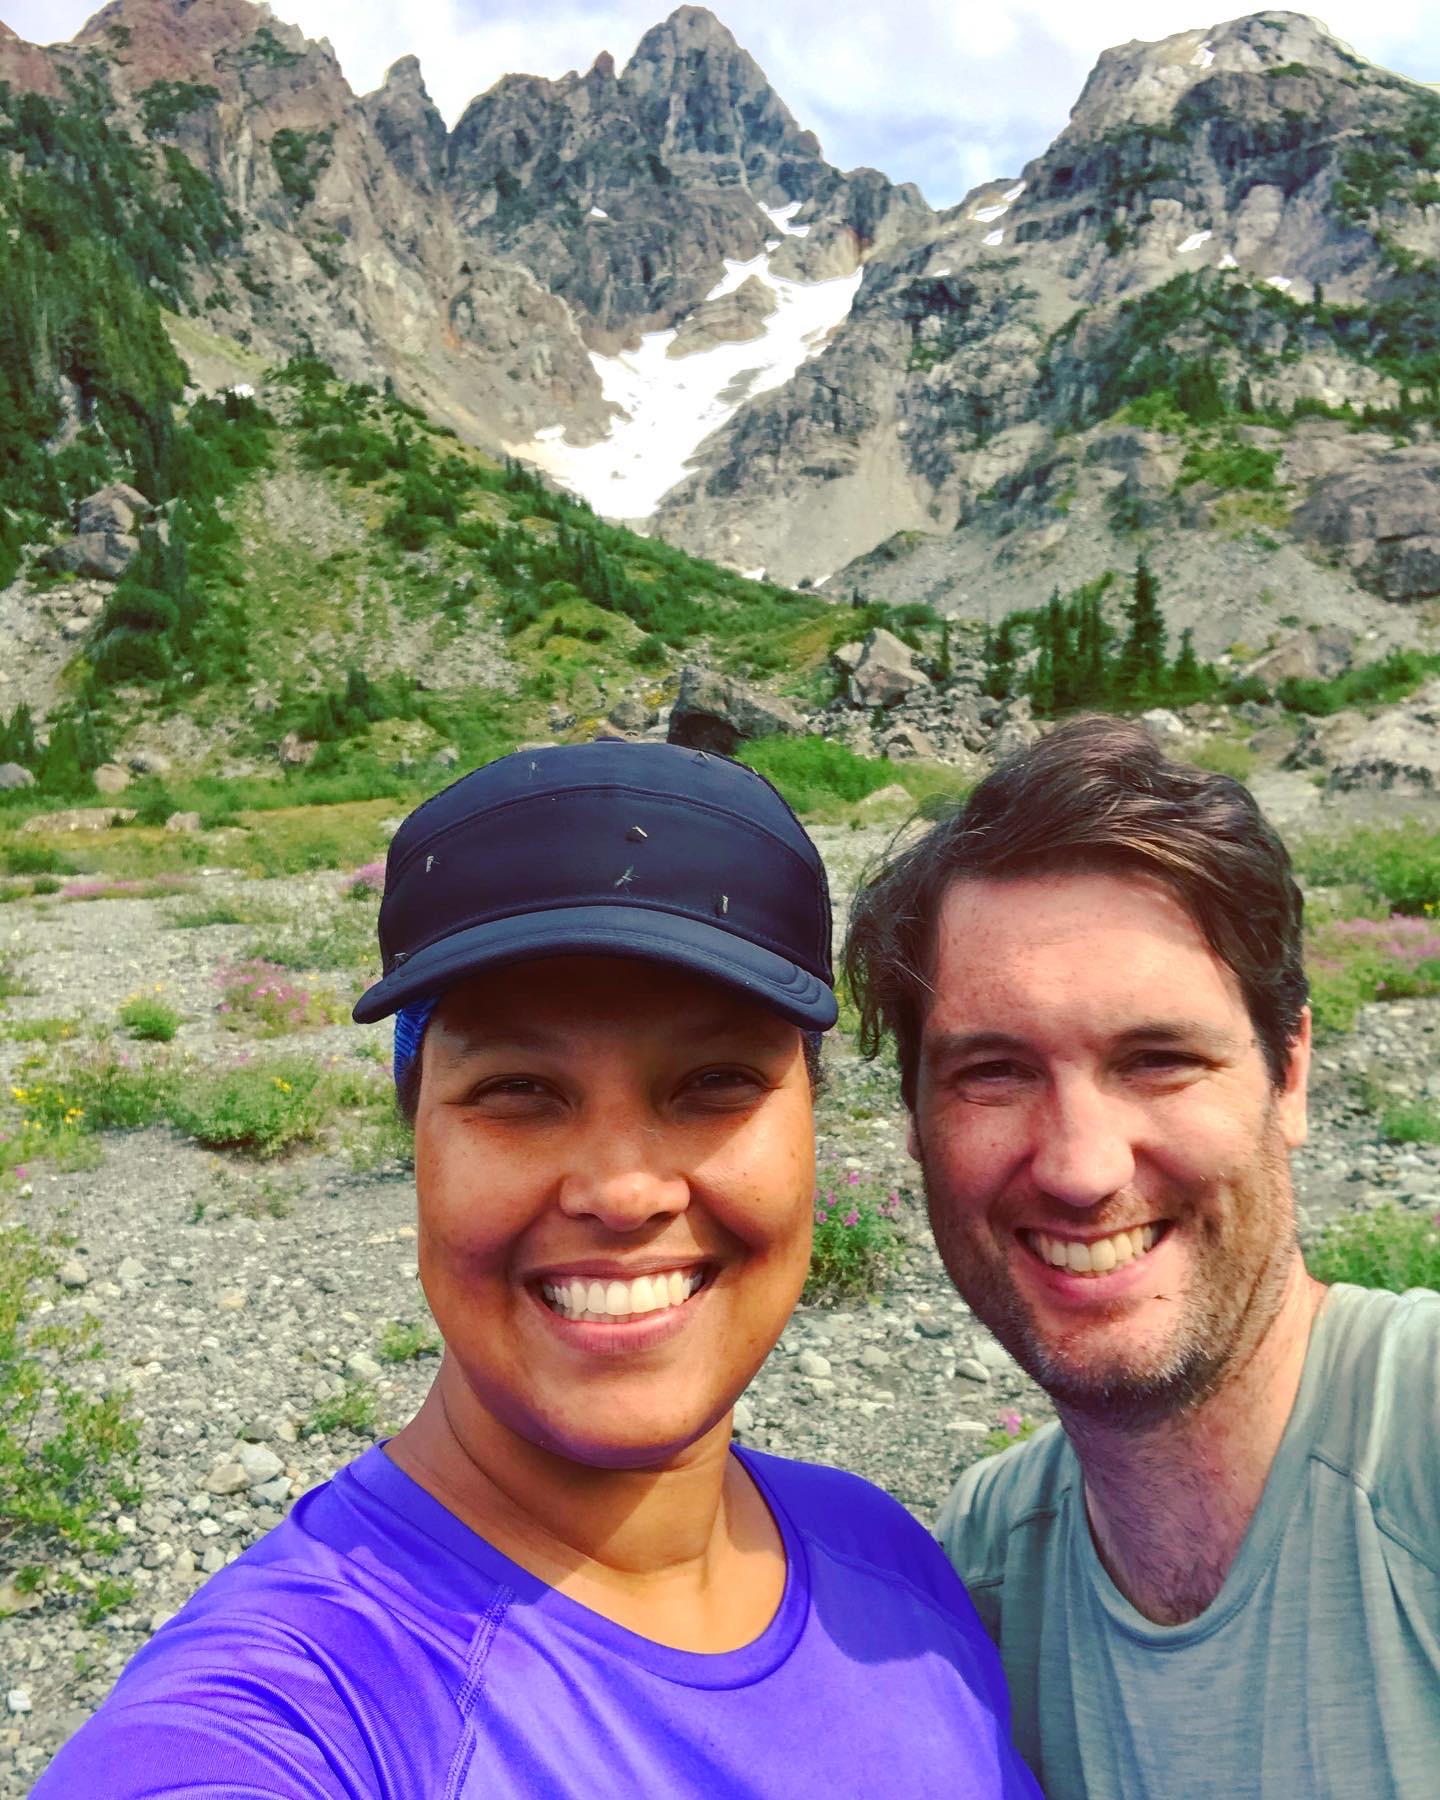 Amanda Banks & her Husband hiking by a mountain